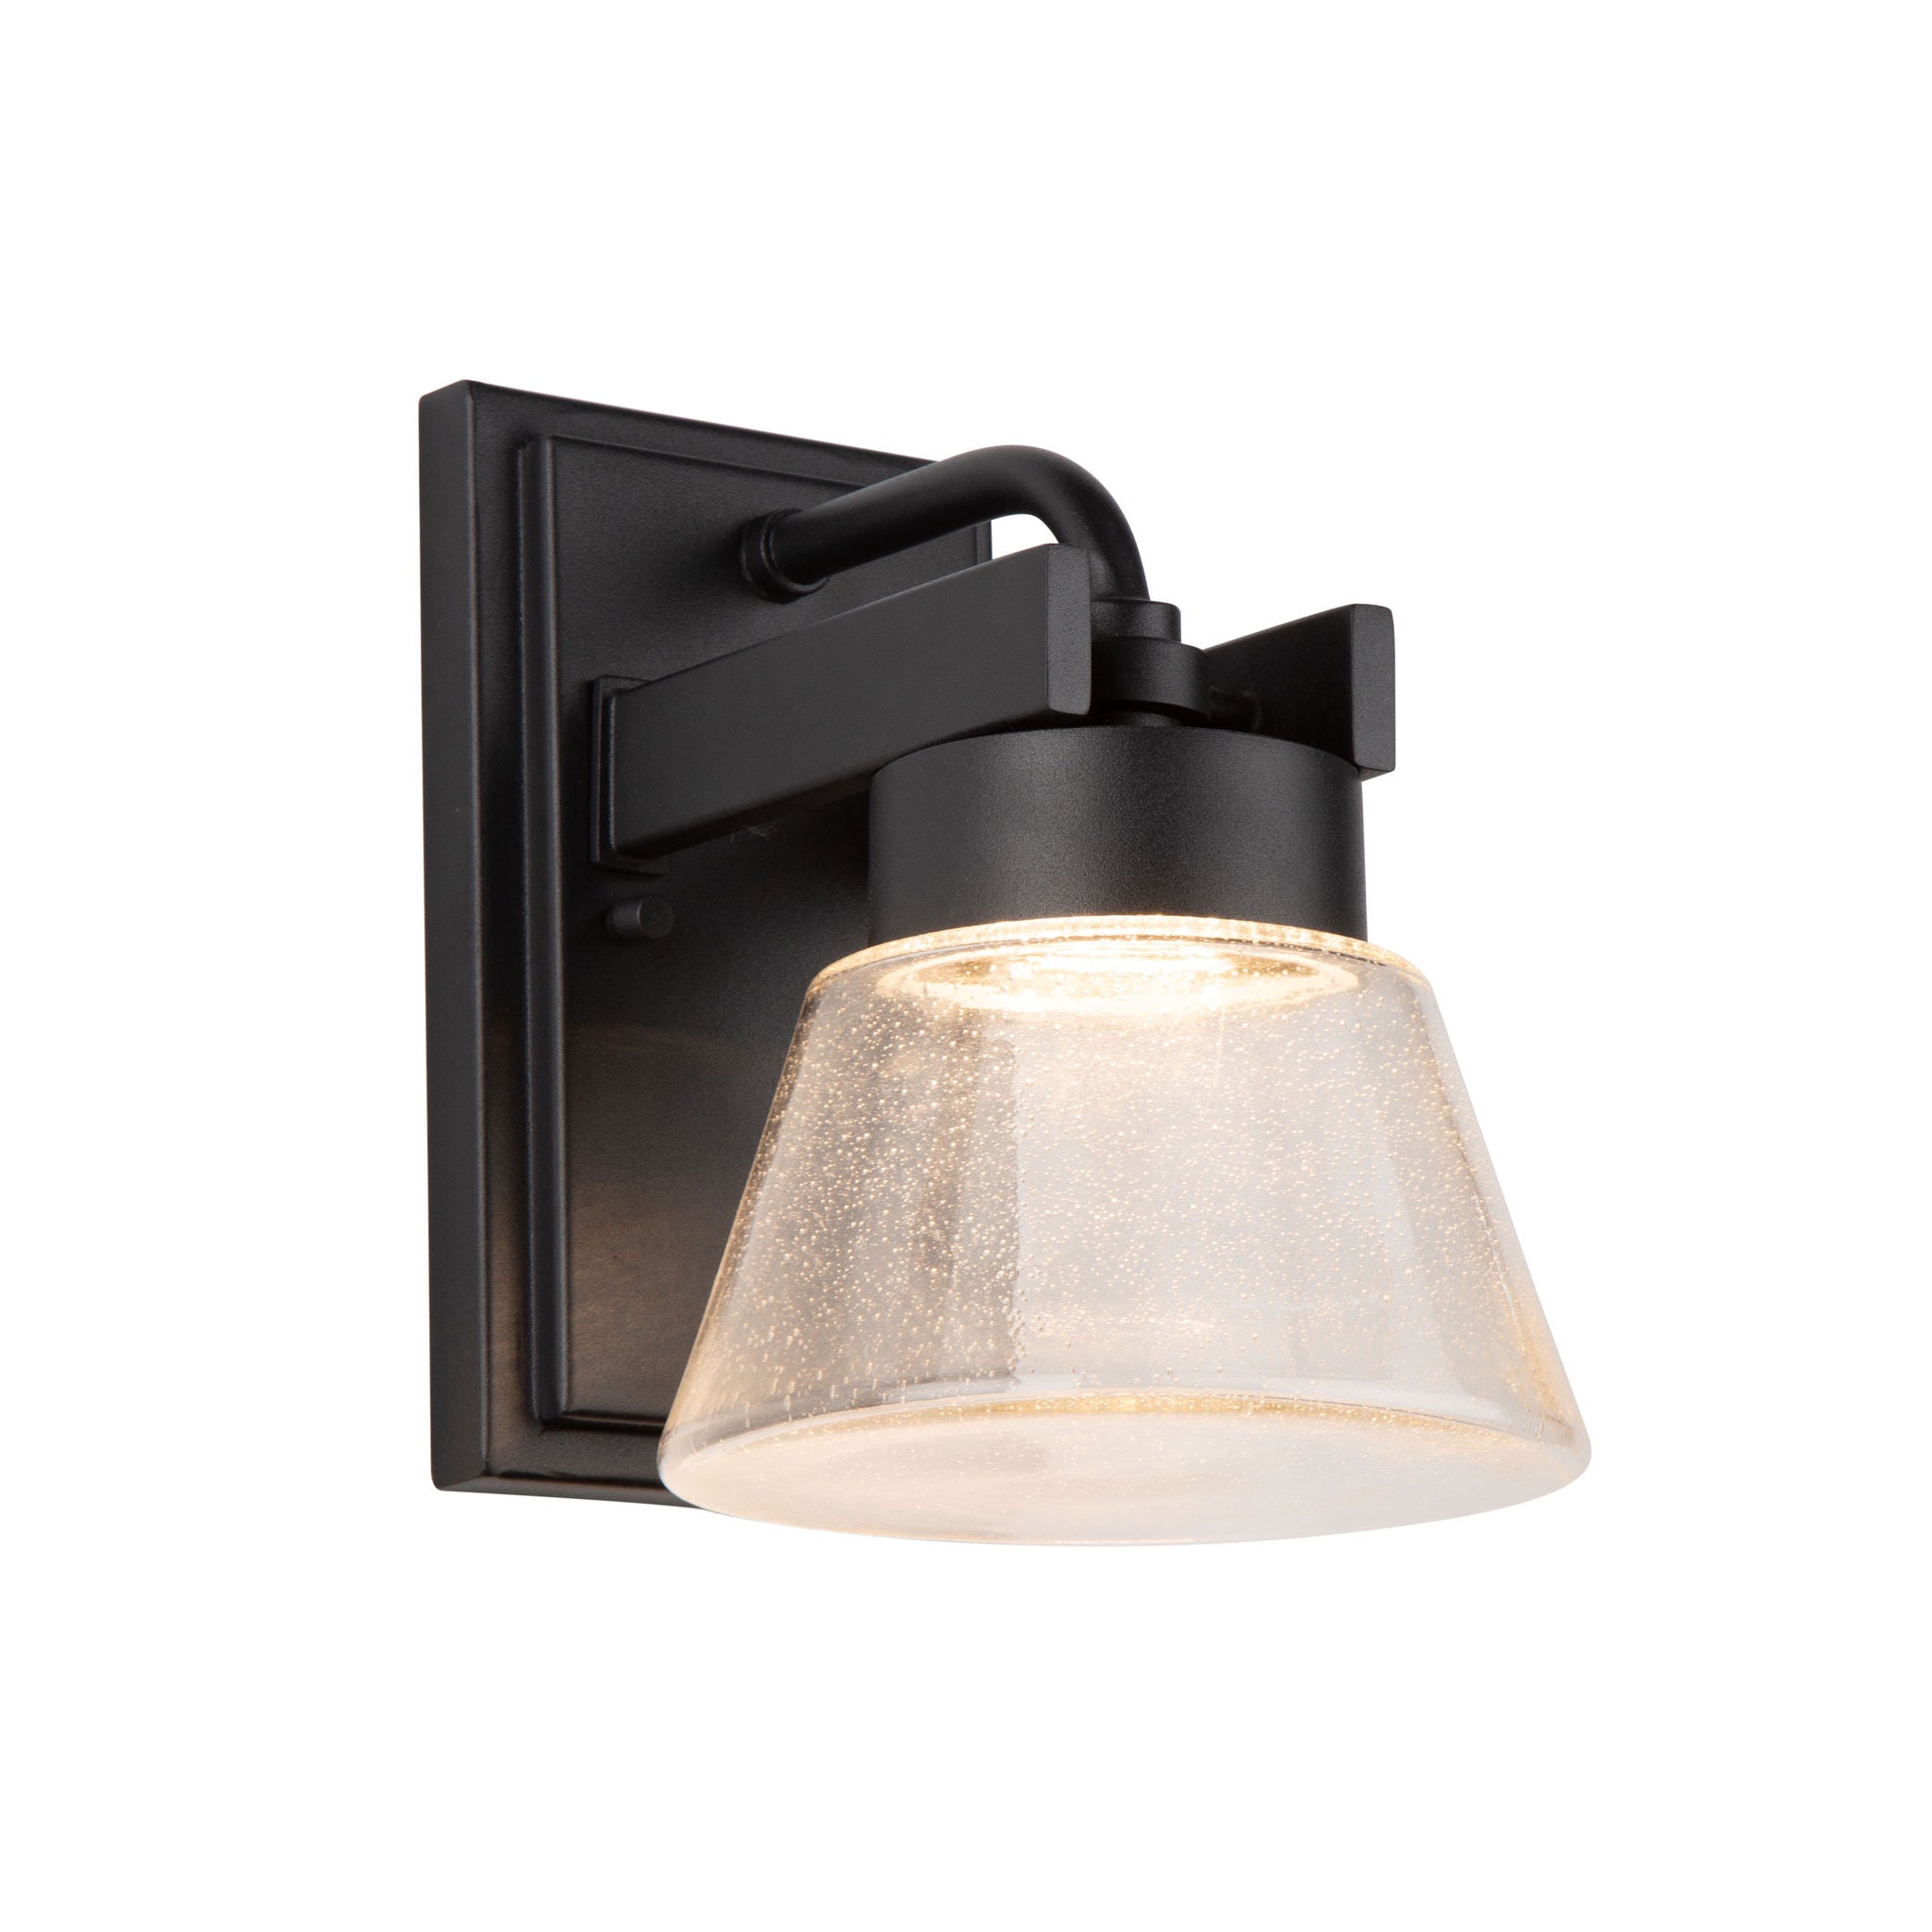 Clareville Outdoor sconce Black INTEGRATED LED - AC9080BK | ARTCRAFT